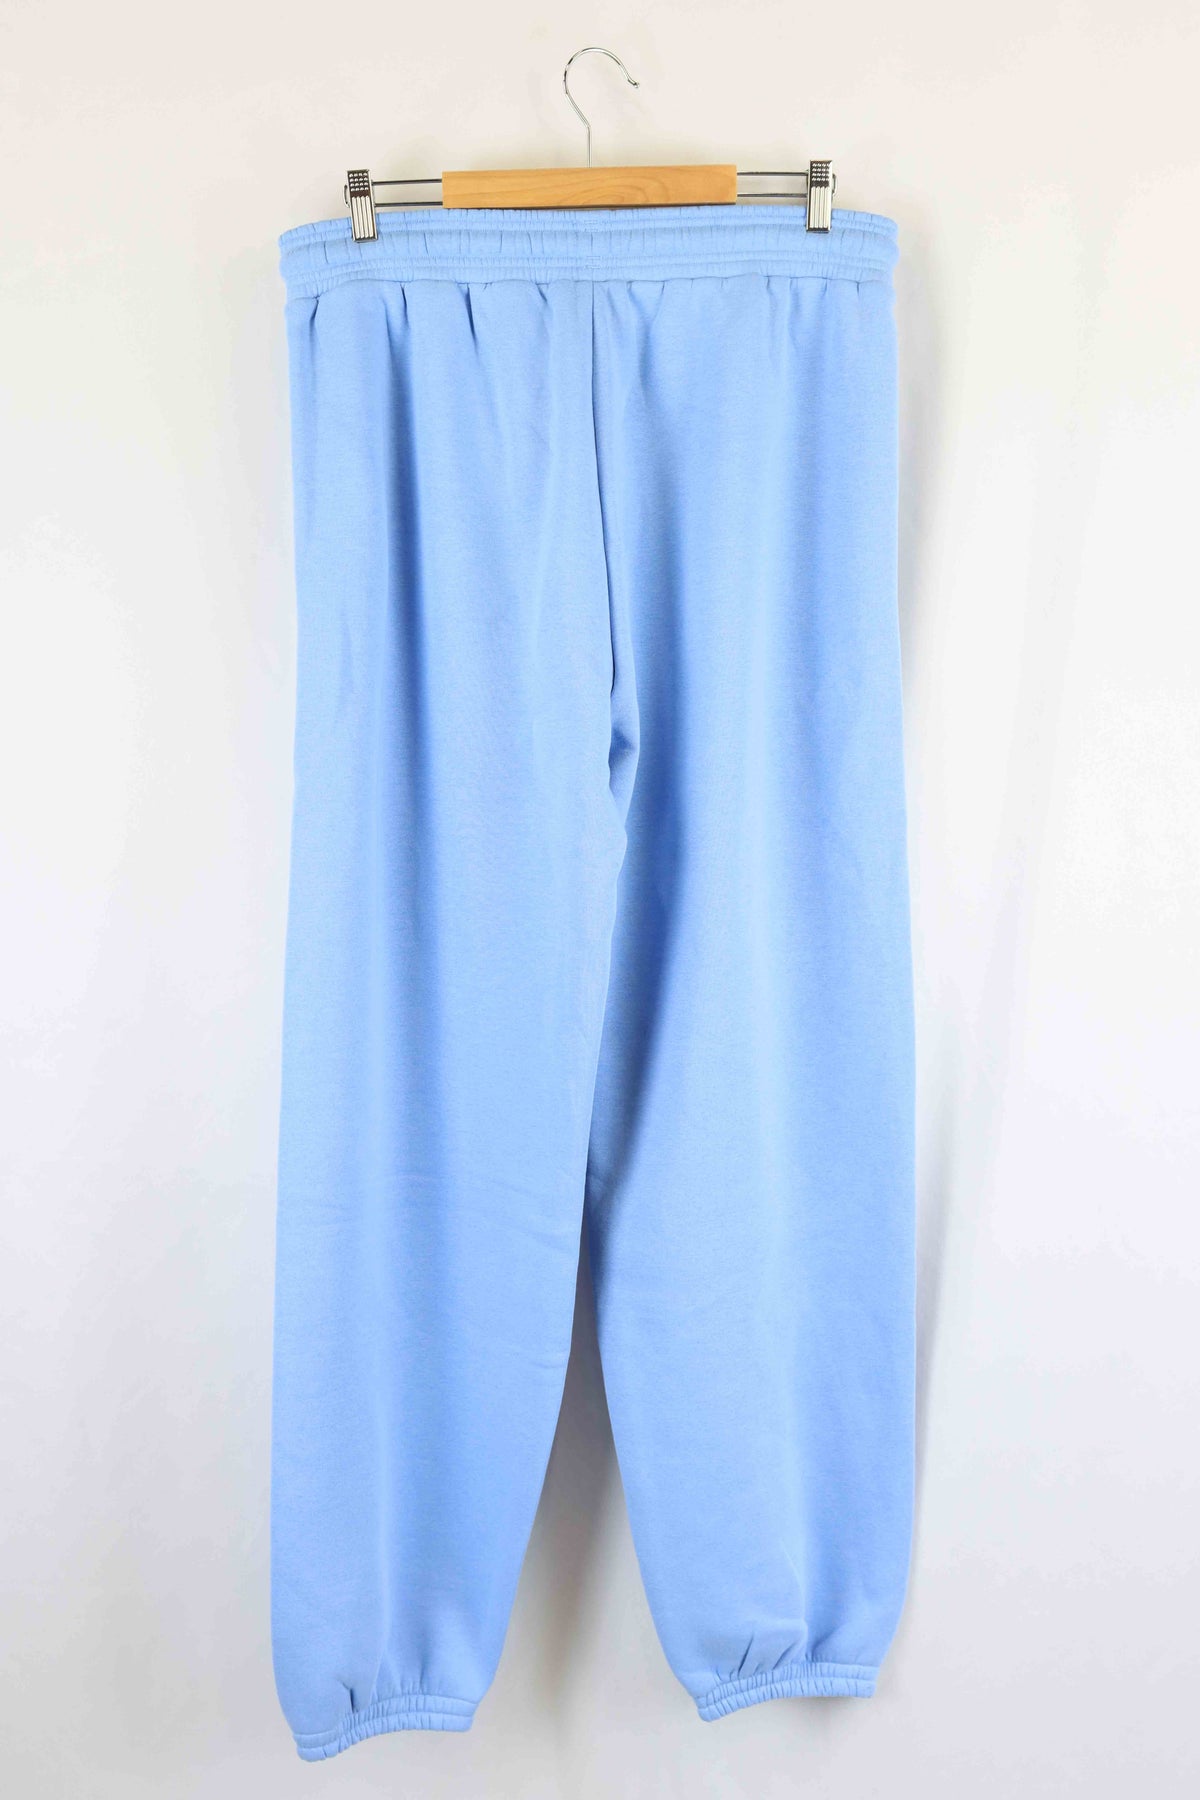 Lorna Jane Blue Track Pants XL